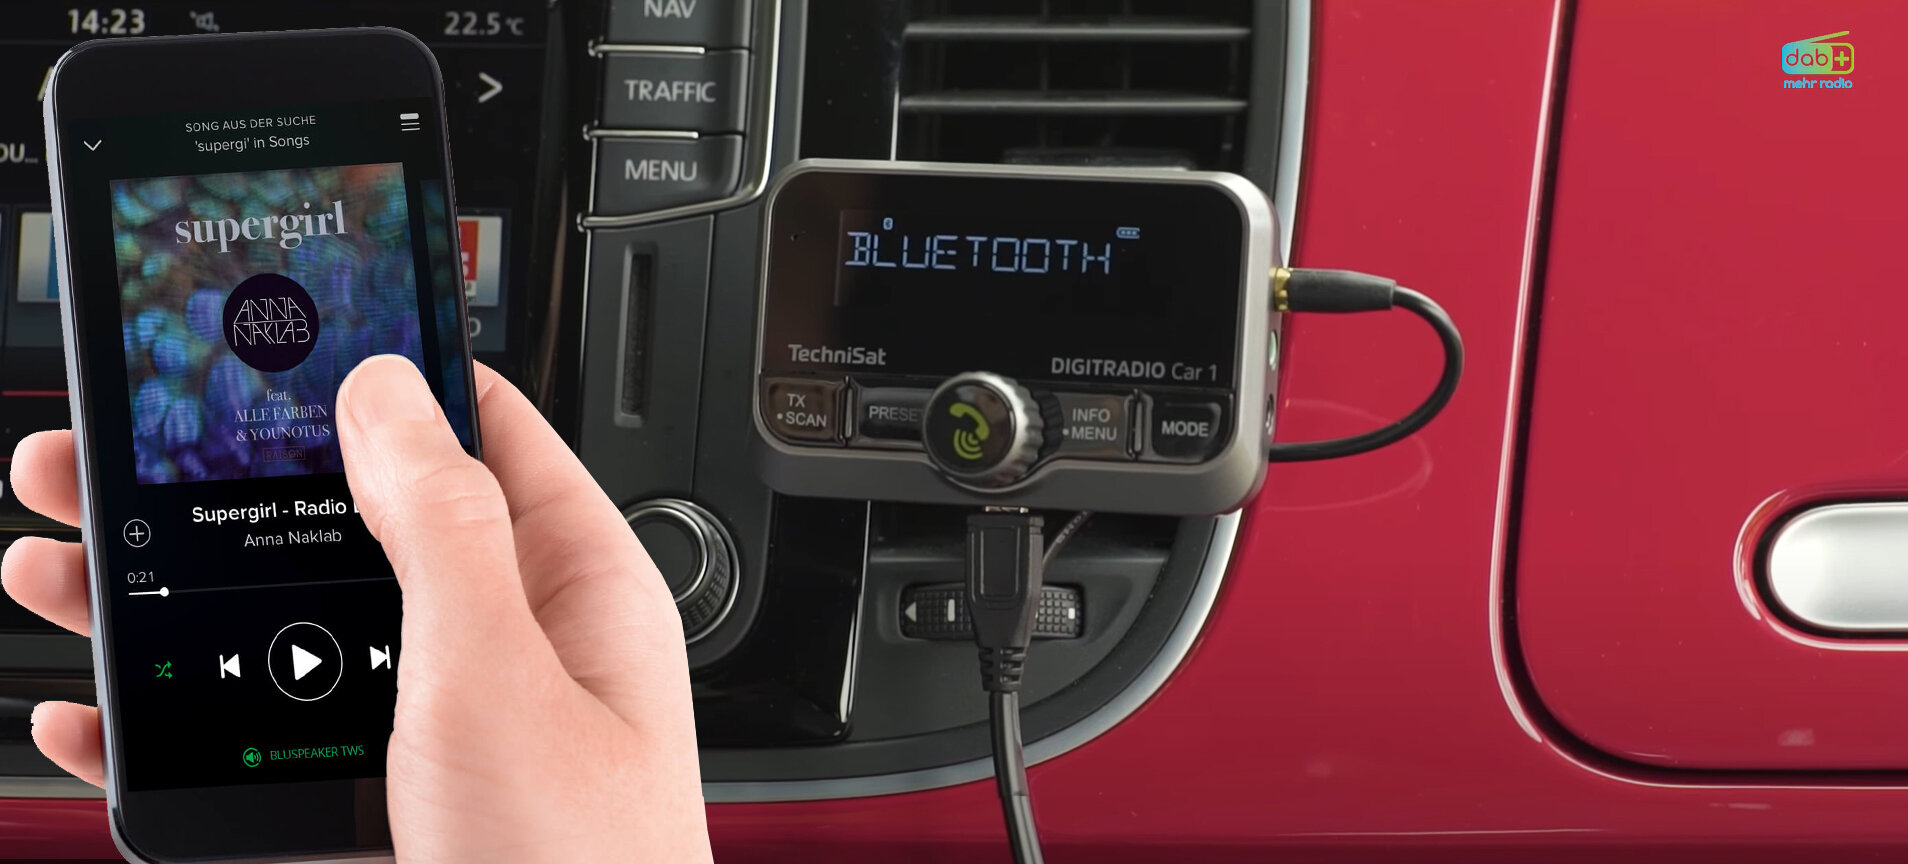 TECHNISAT Digitradio Car 1 Transmiter - niskie ceny i opinie w Media Expert